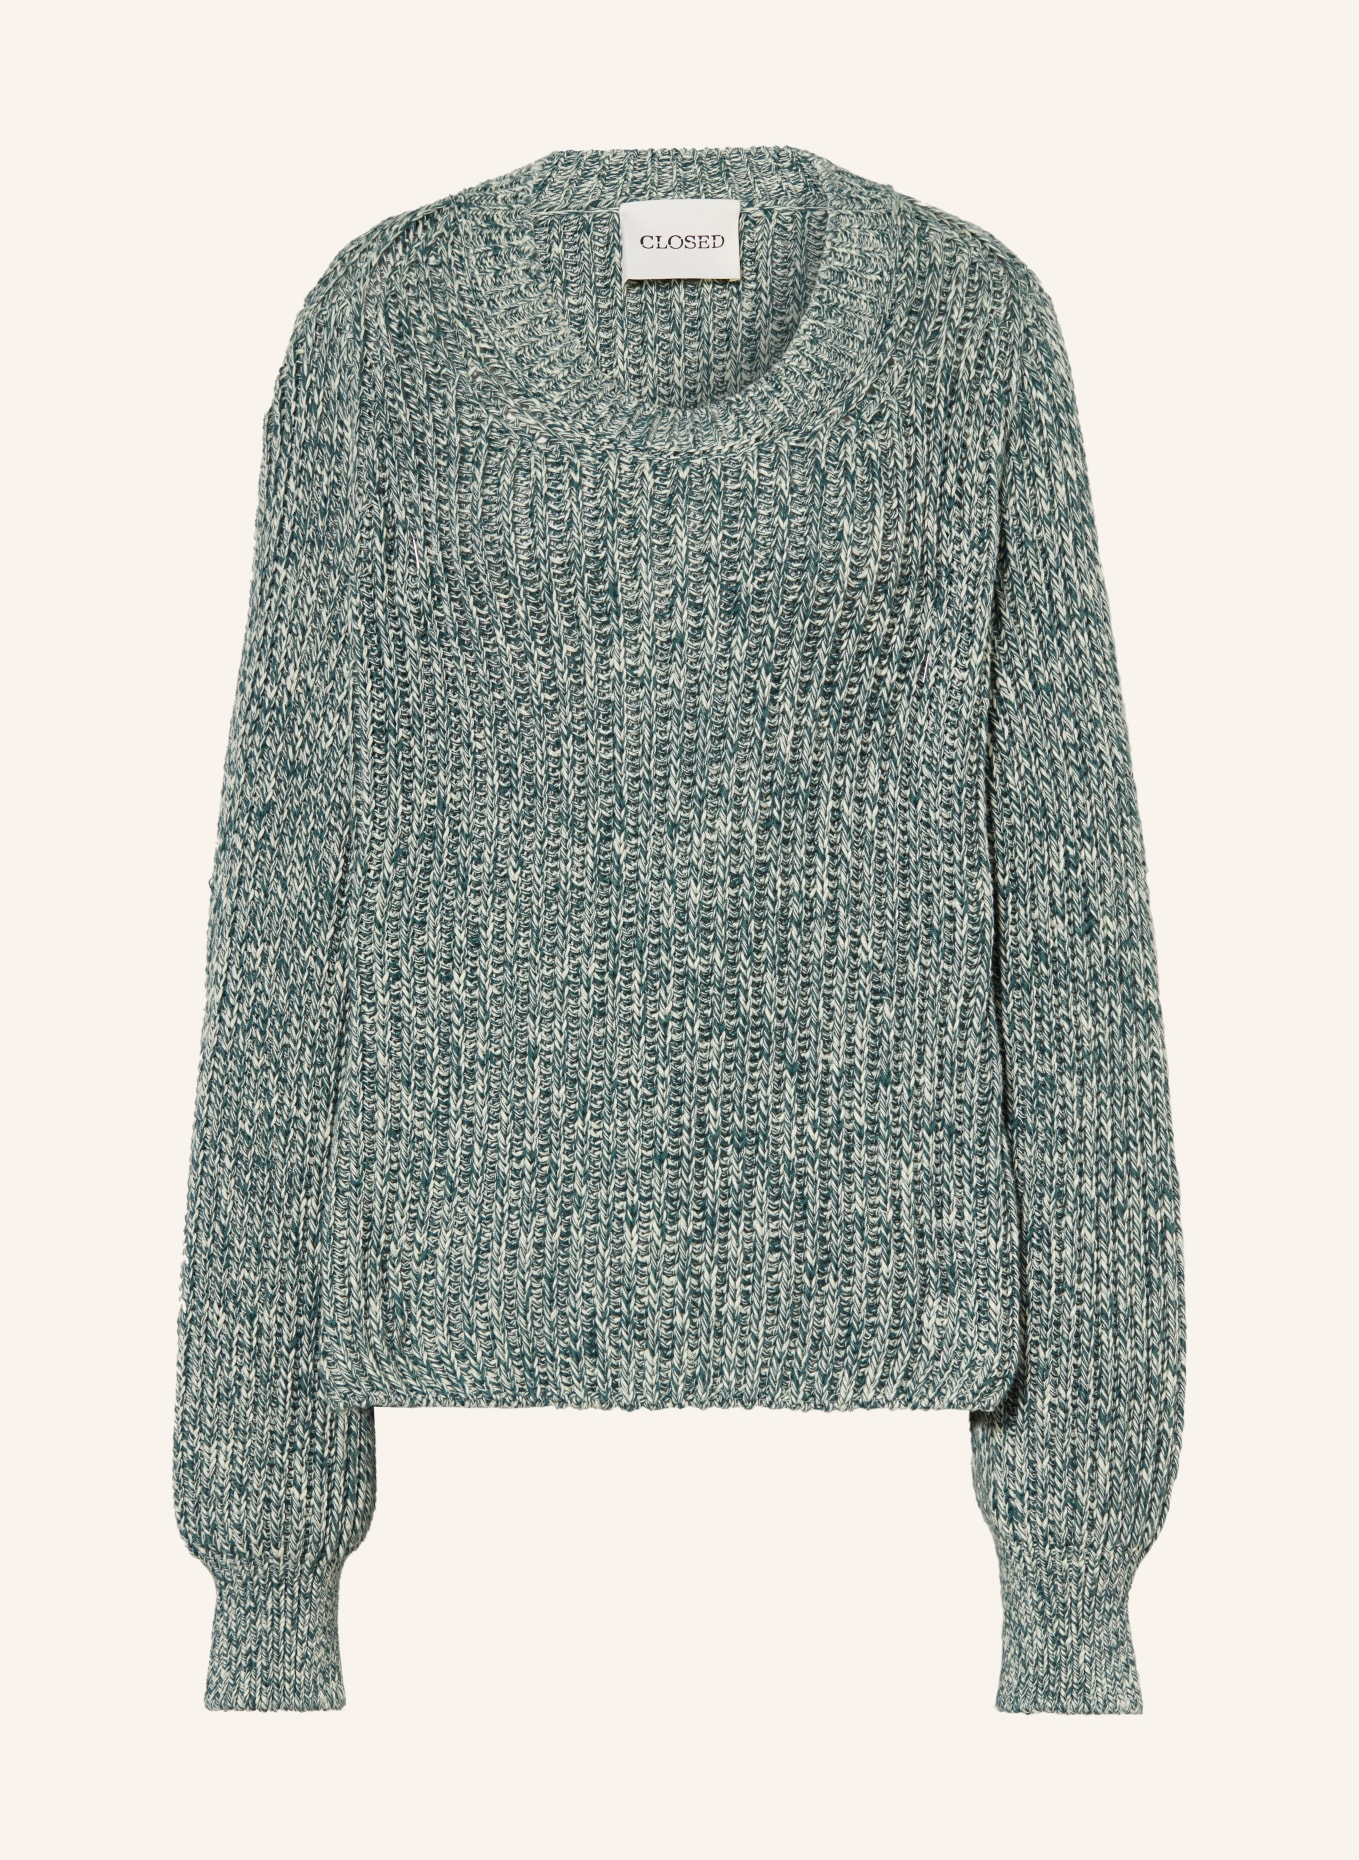 CLOSED Pullover, Farbe: WEISS/ DUNKELGRÜN (Bild 1)